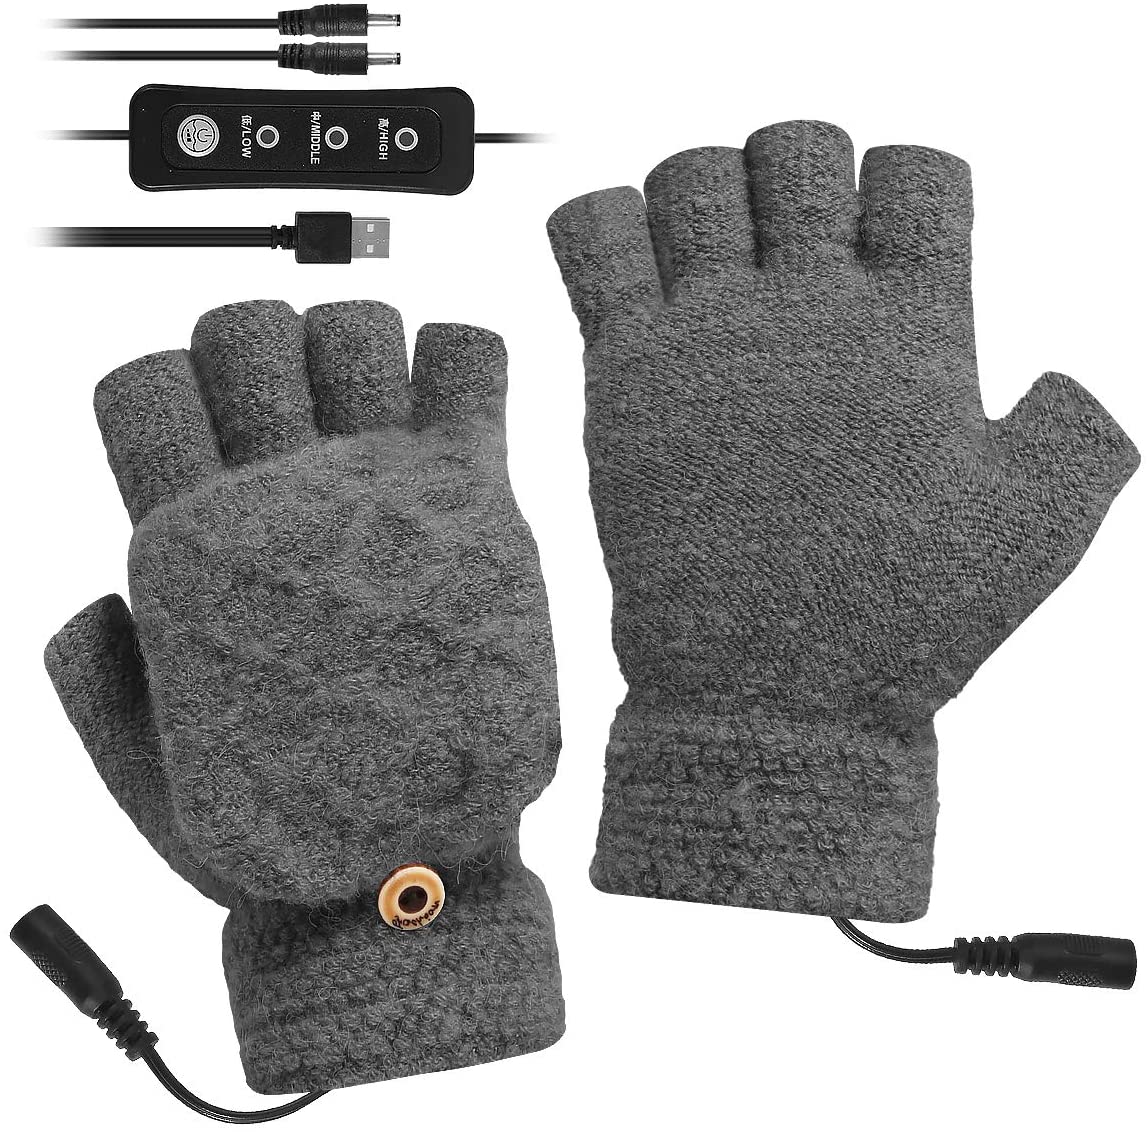 USB Heated Hand Gloves - WorkwearToronto.com - Chritmas Gift Ideas 2020 - Corporate Christmas Gifts - Amazon